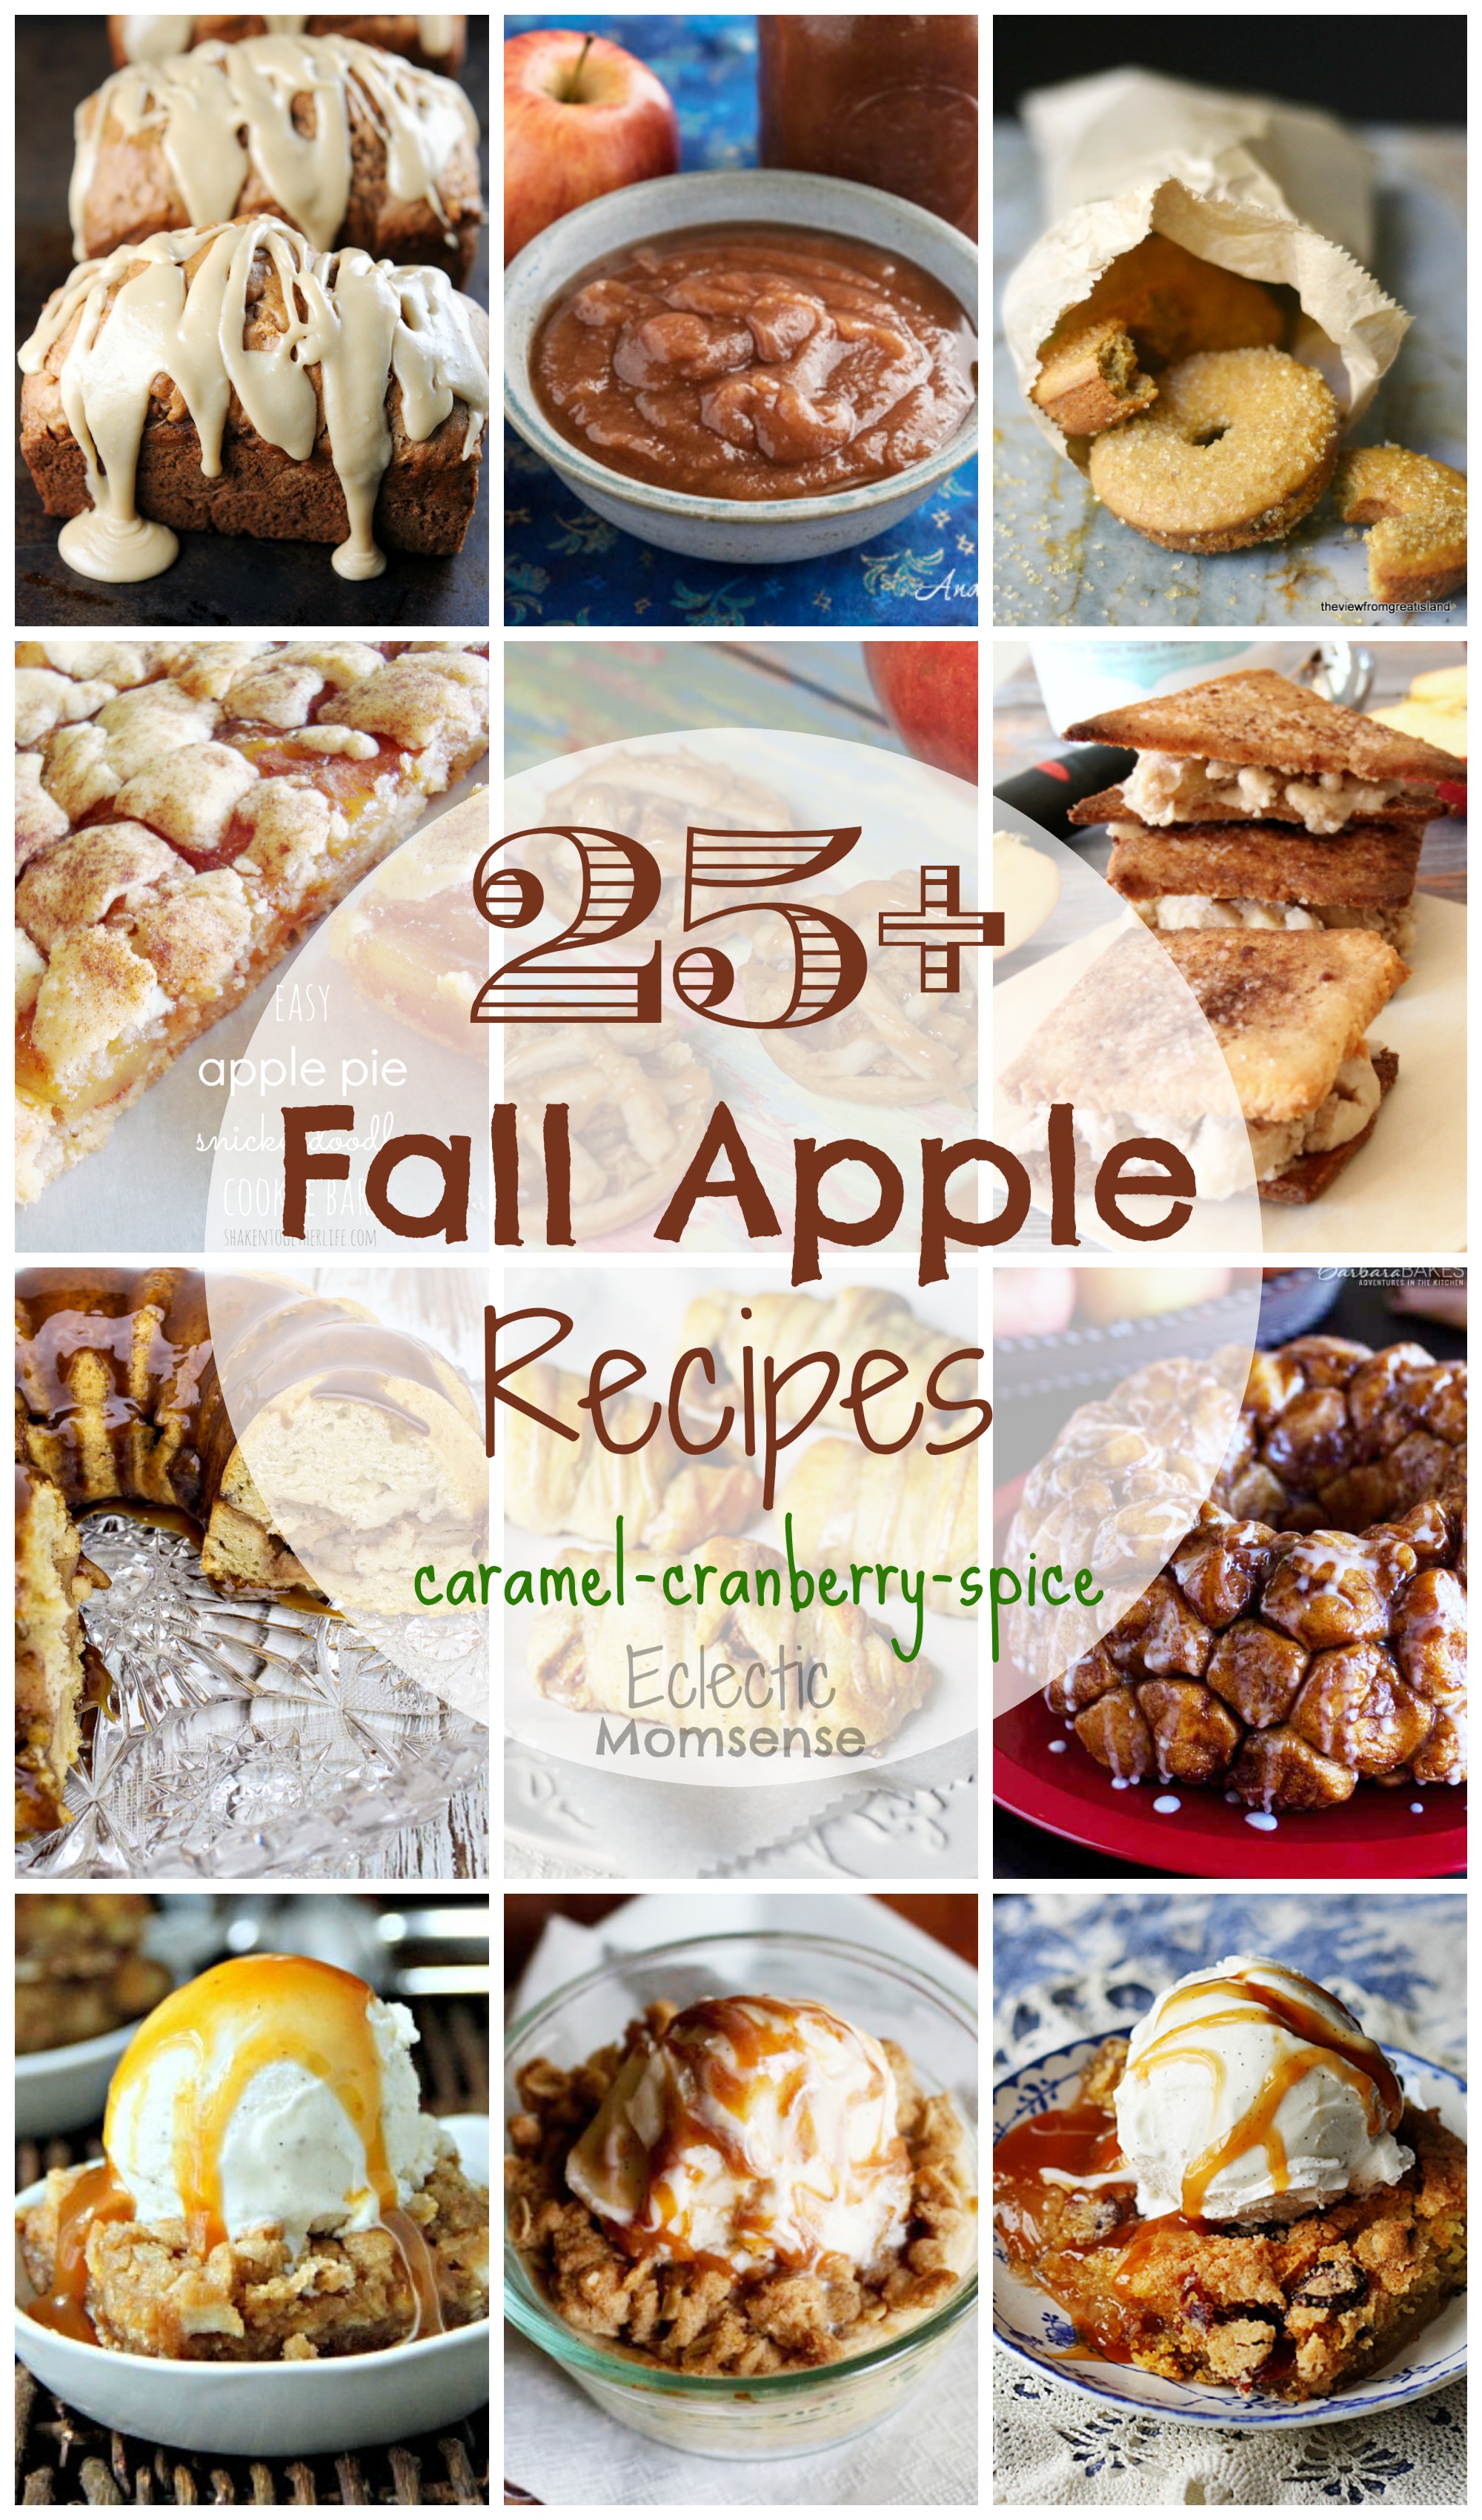 Fall Apple Recipes #foodie #sponsored